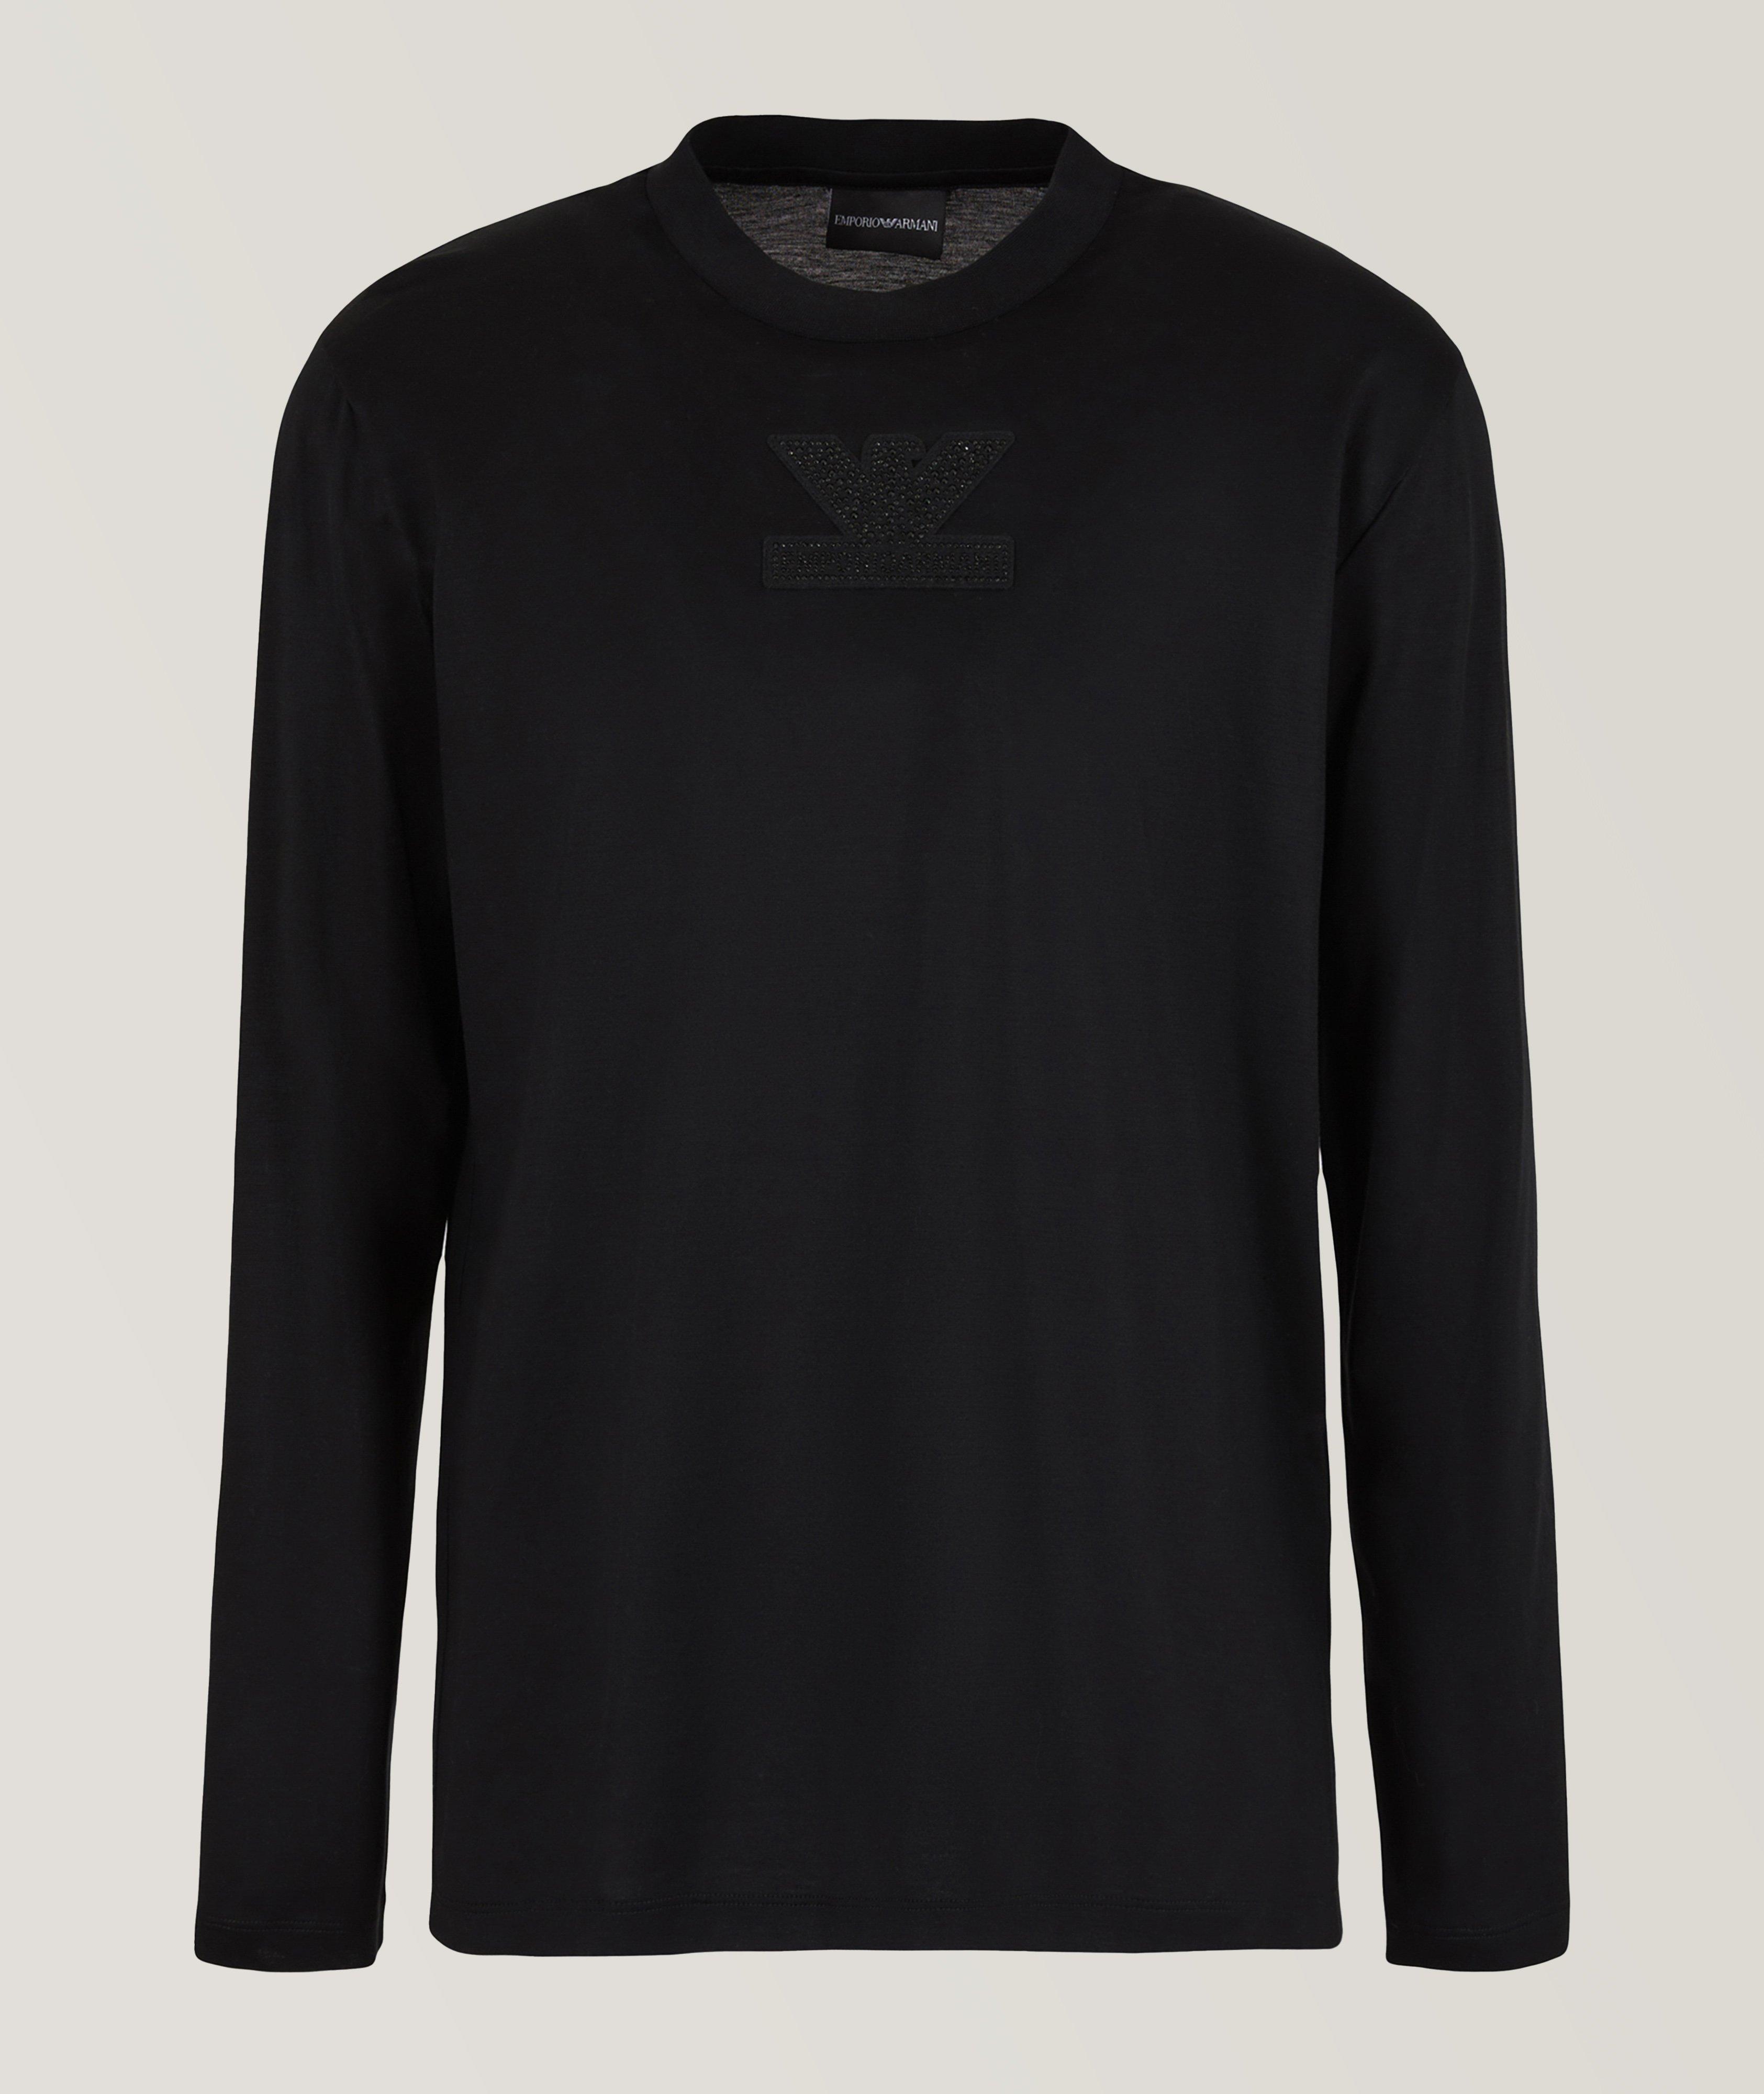 Clubwear Capsule Rhinestone Logo Long Sleeve T-Shirt image 0